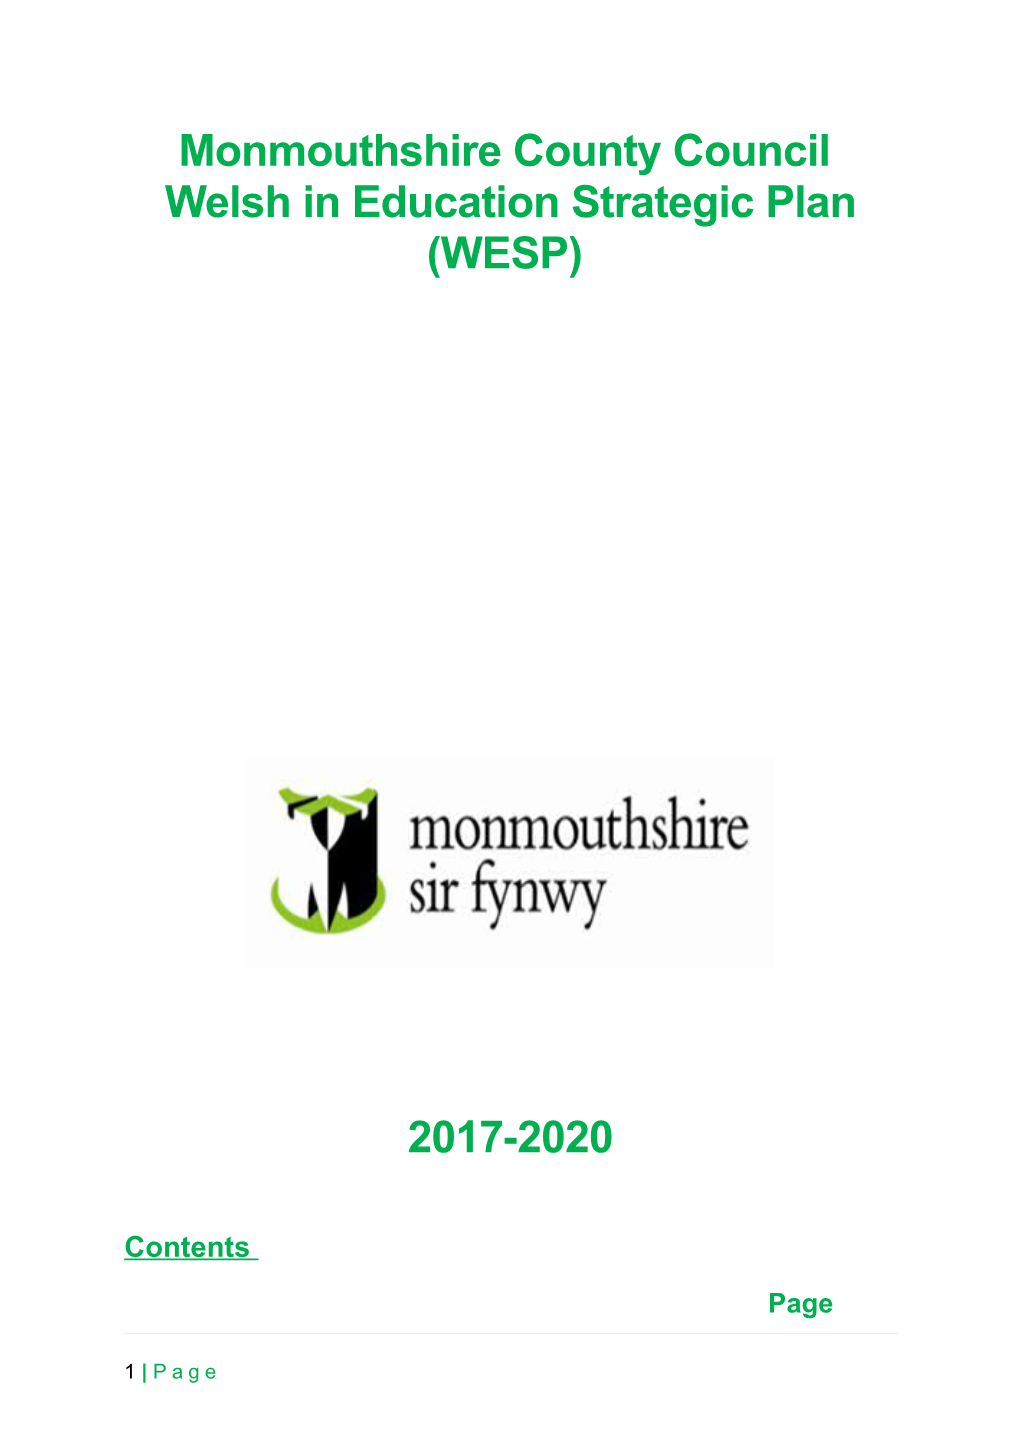 Welsh in Education Strategic Plan (WESP)